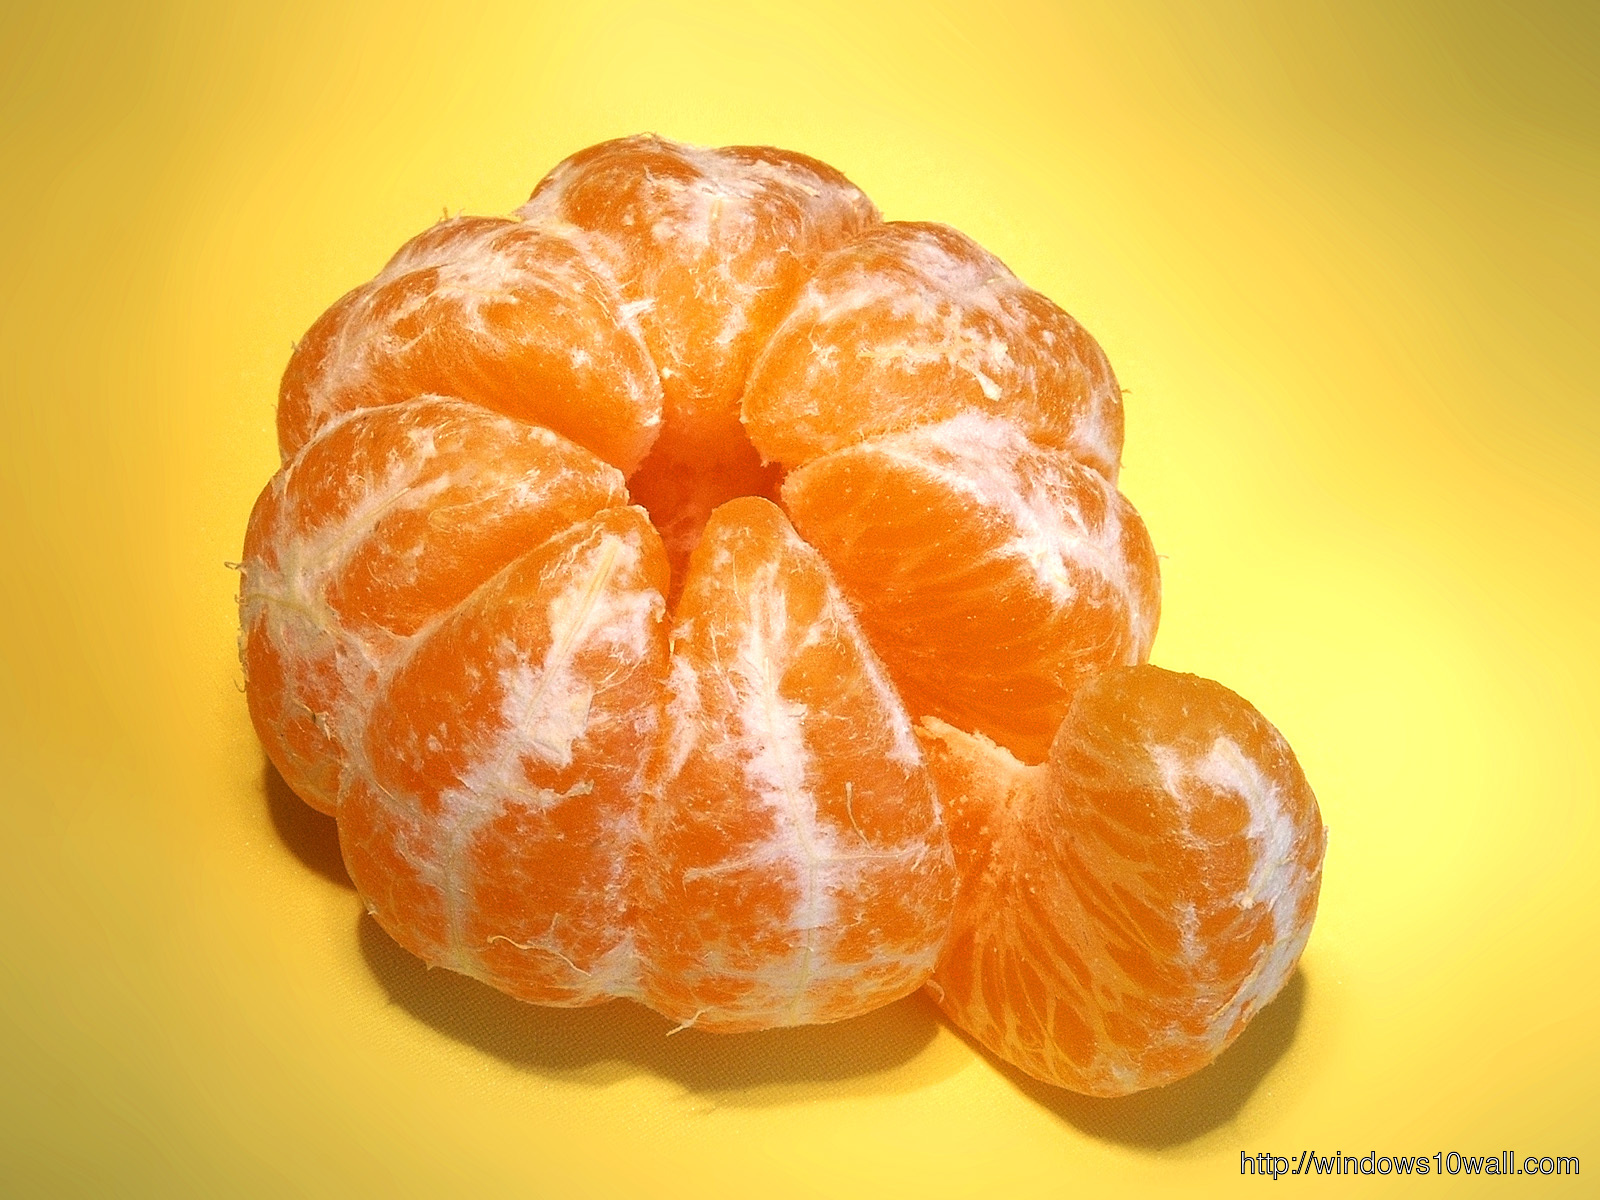 Orange Fruit Background Wallpaper